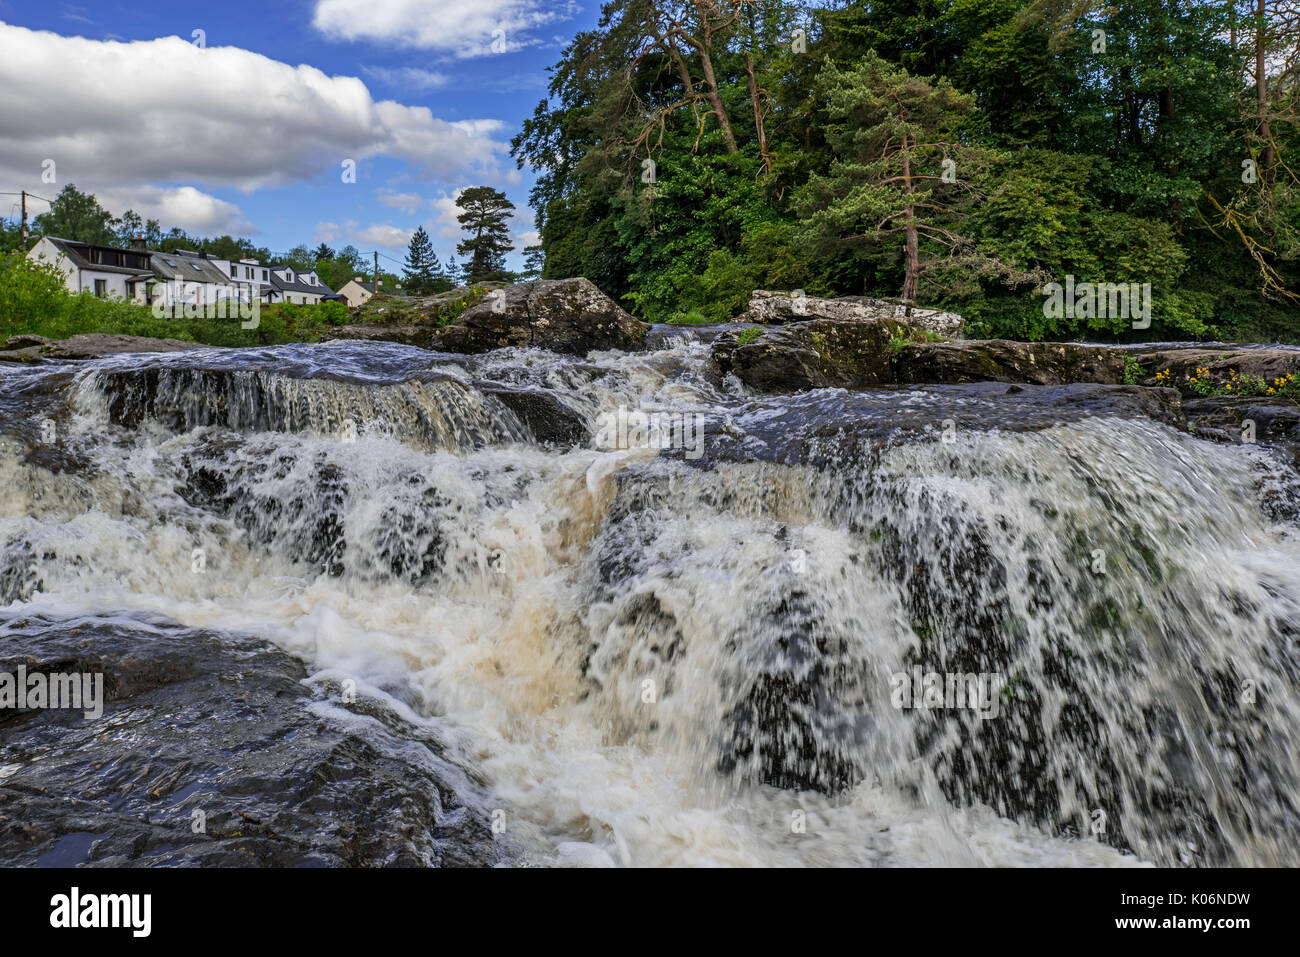 Falls of Dochart, whitewater rapid in the village Killin, Loch Lomond & The Trossachs National Park, Stirling, Scotland, UK Stock Photo